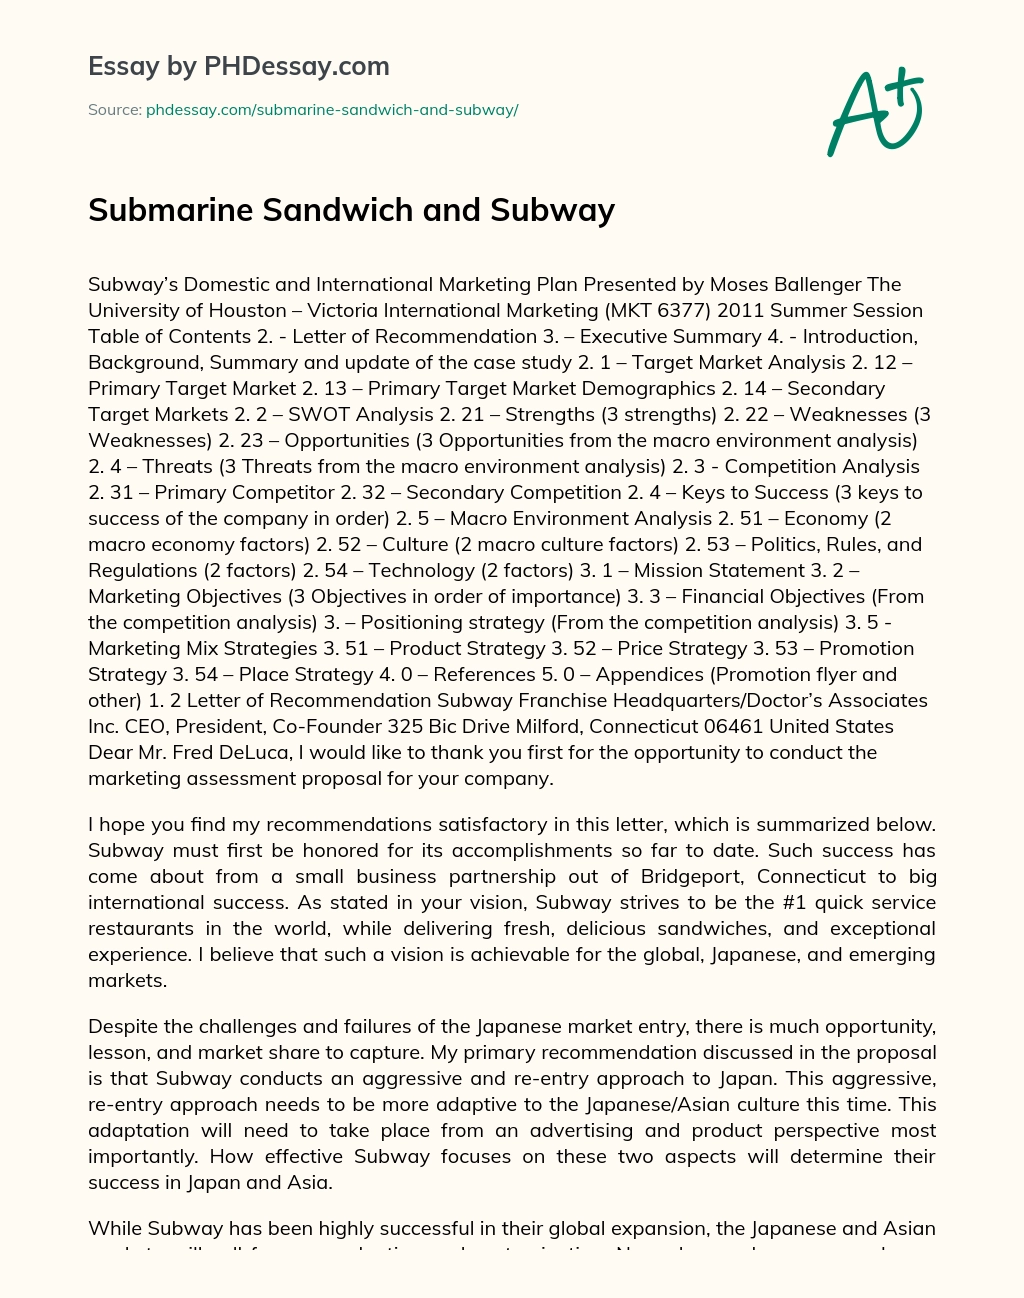 Submarine Sandwich and Subway essay